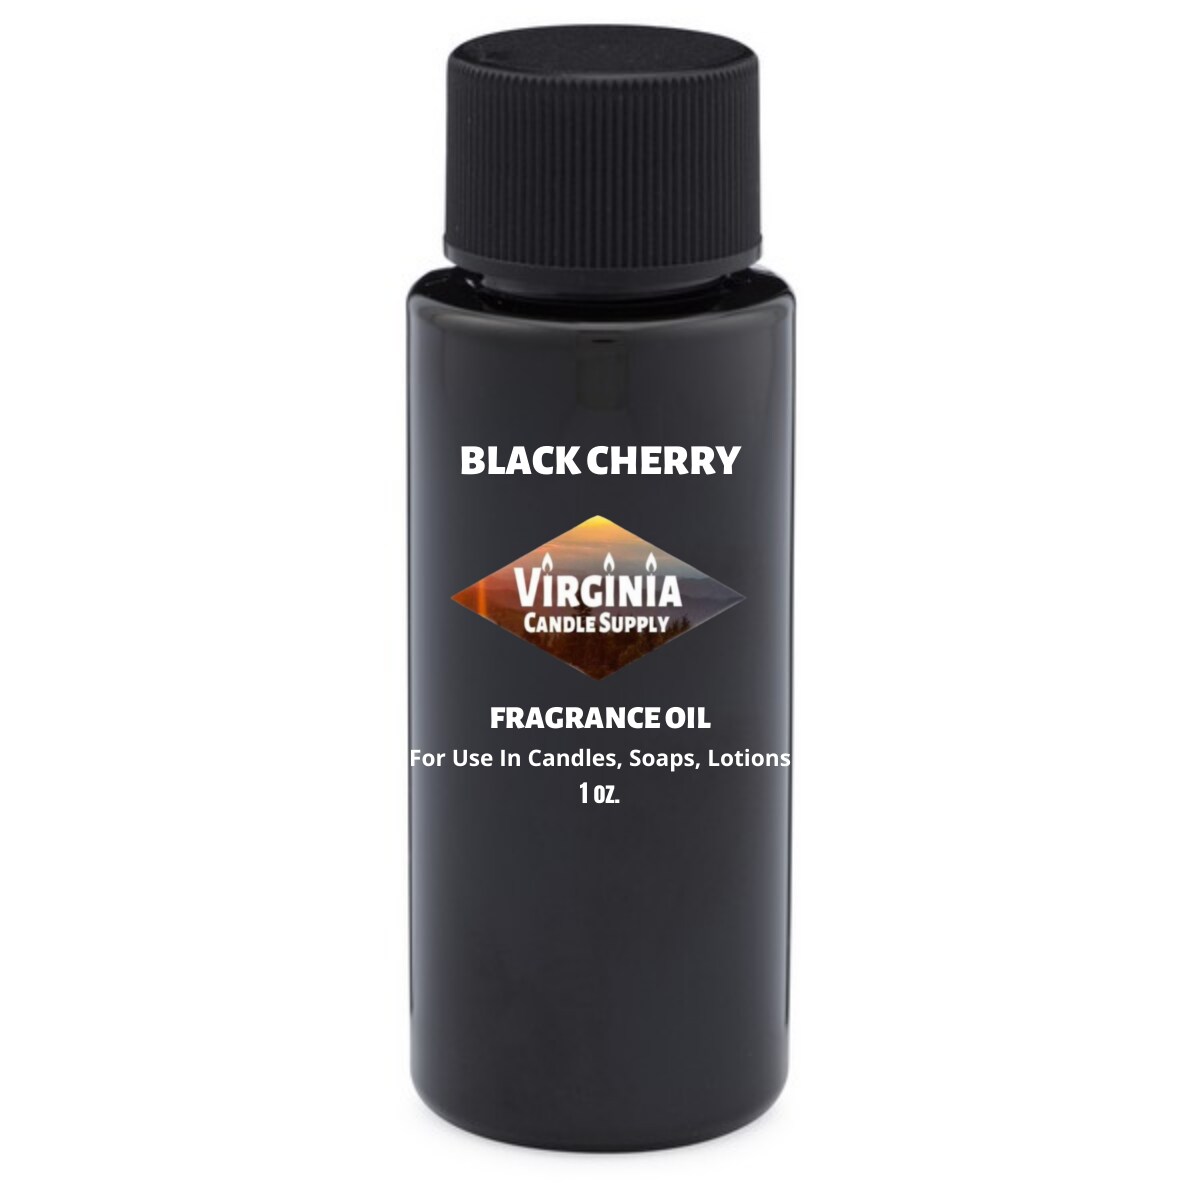 Black Cherry Fragrance Oil Our Version Of The Brand Name 1 Oz Bottle 